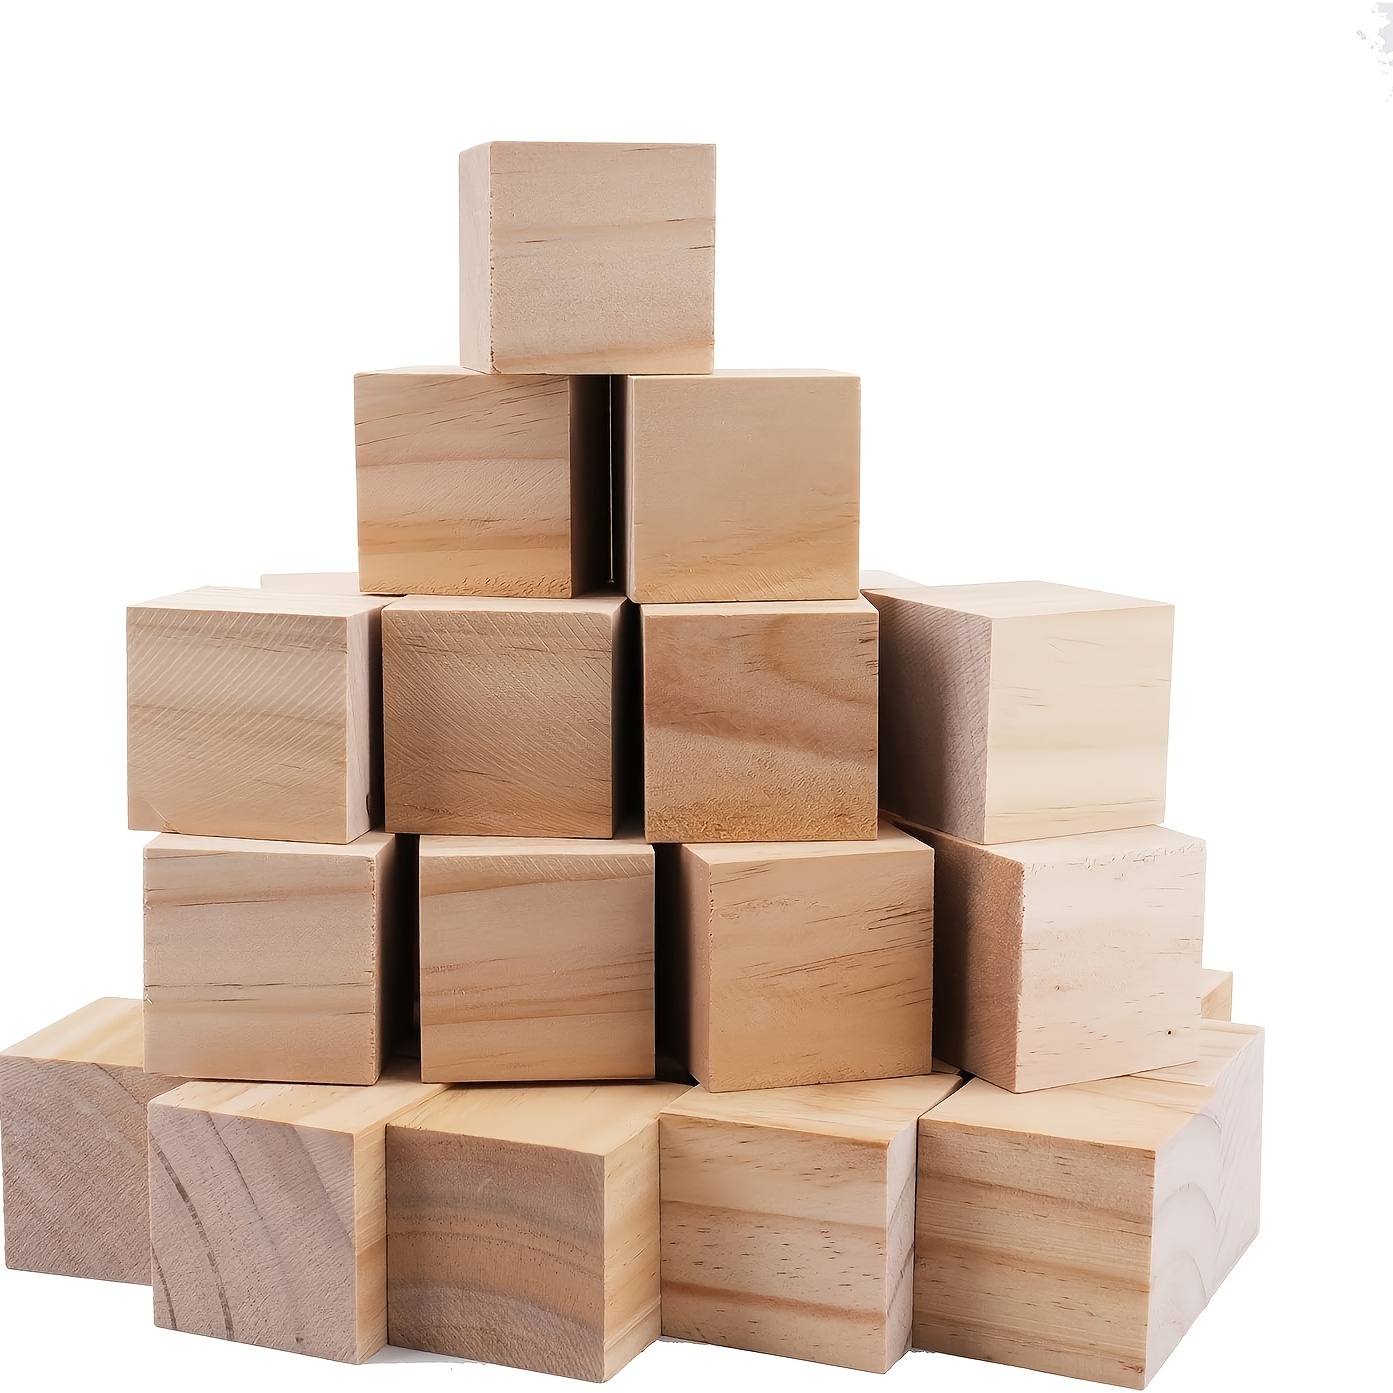 Madera de 4 pulgadas para tallar, 12 cubos de madera sin terminar, bloques  de madera rectangulares para tallar, manualidades y tallar para adultos